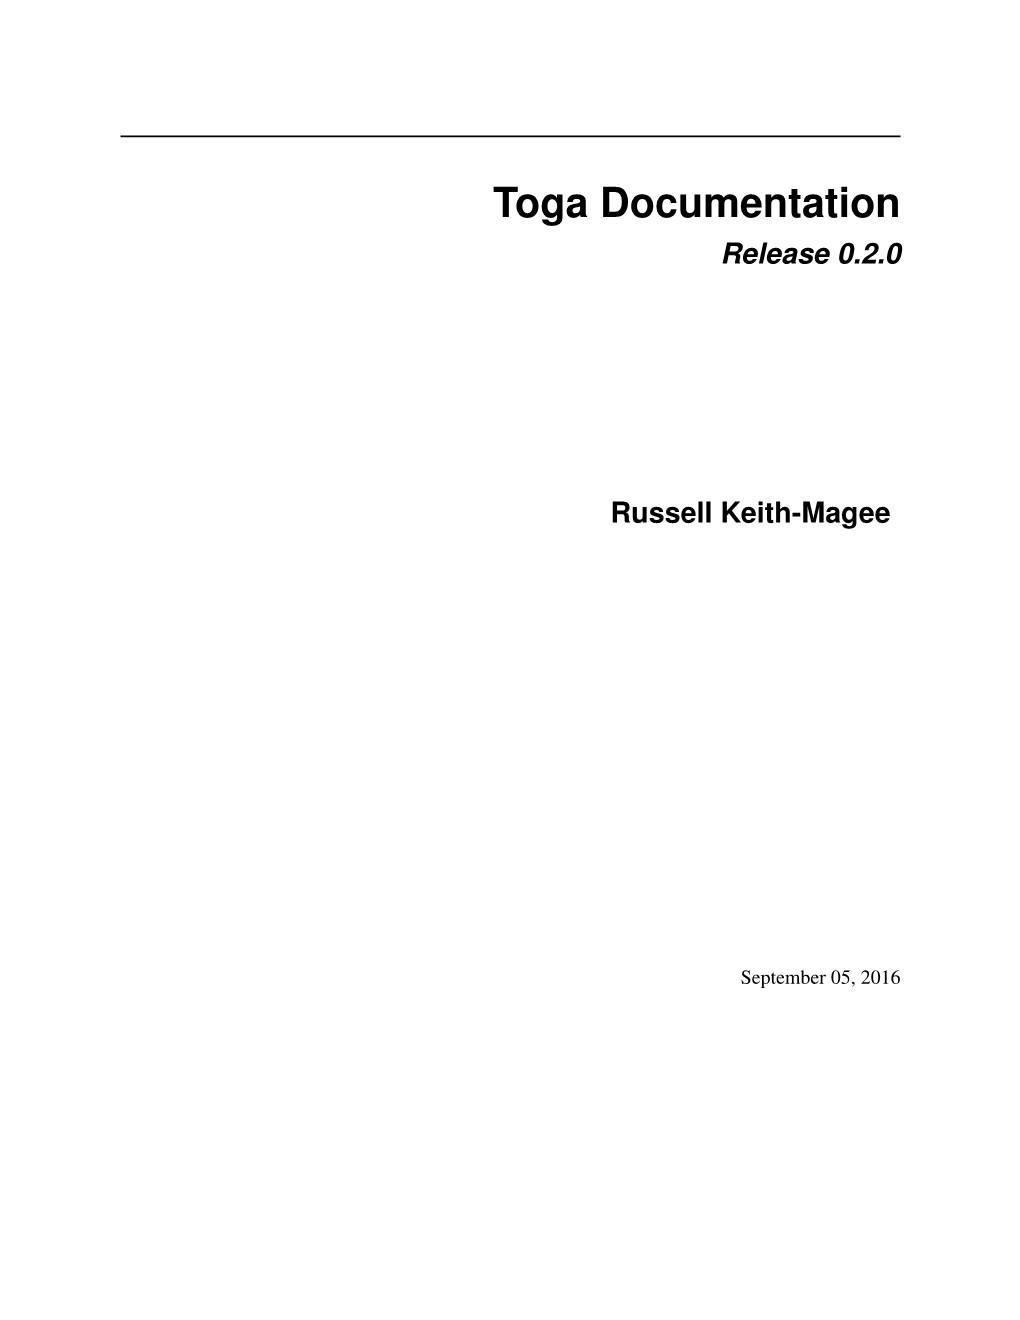 Toga Documentation Release 0.2.0